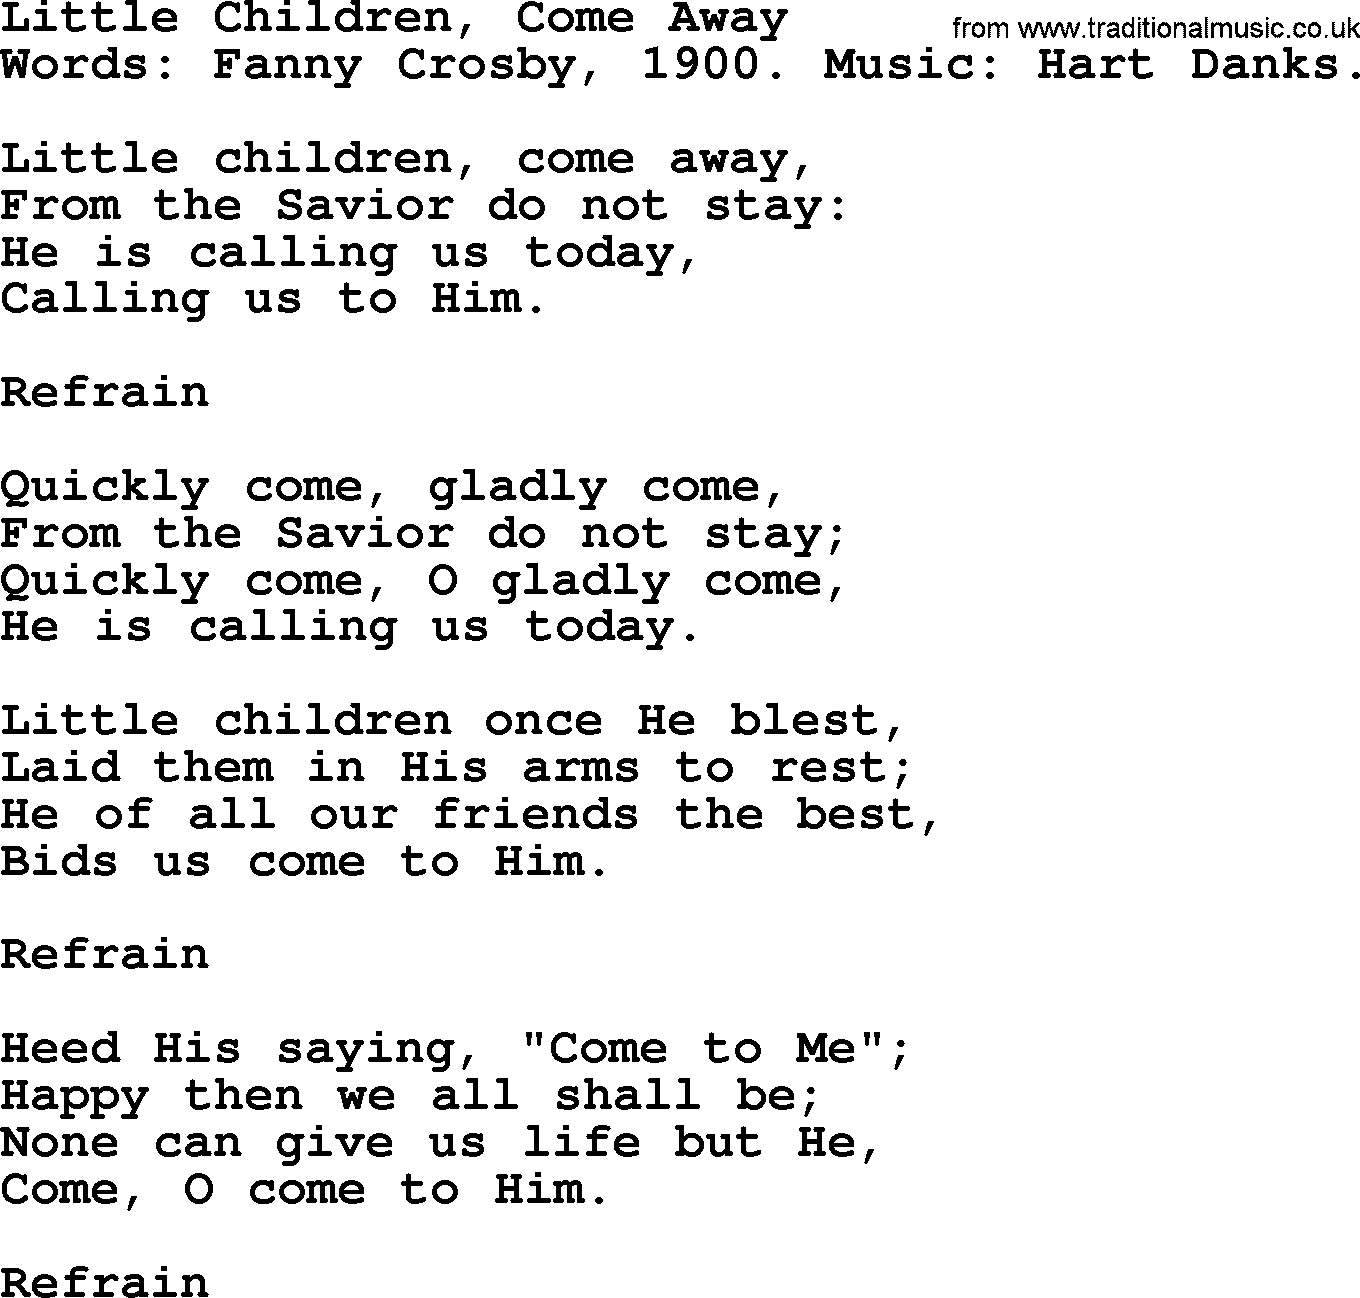 Fanny Crosby song: Little Children, Come Away, lyrics